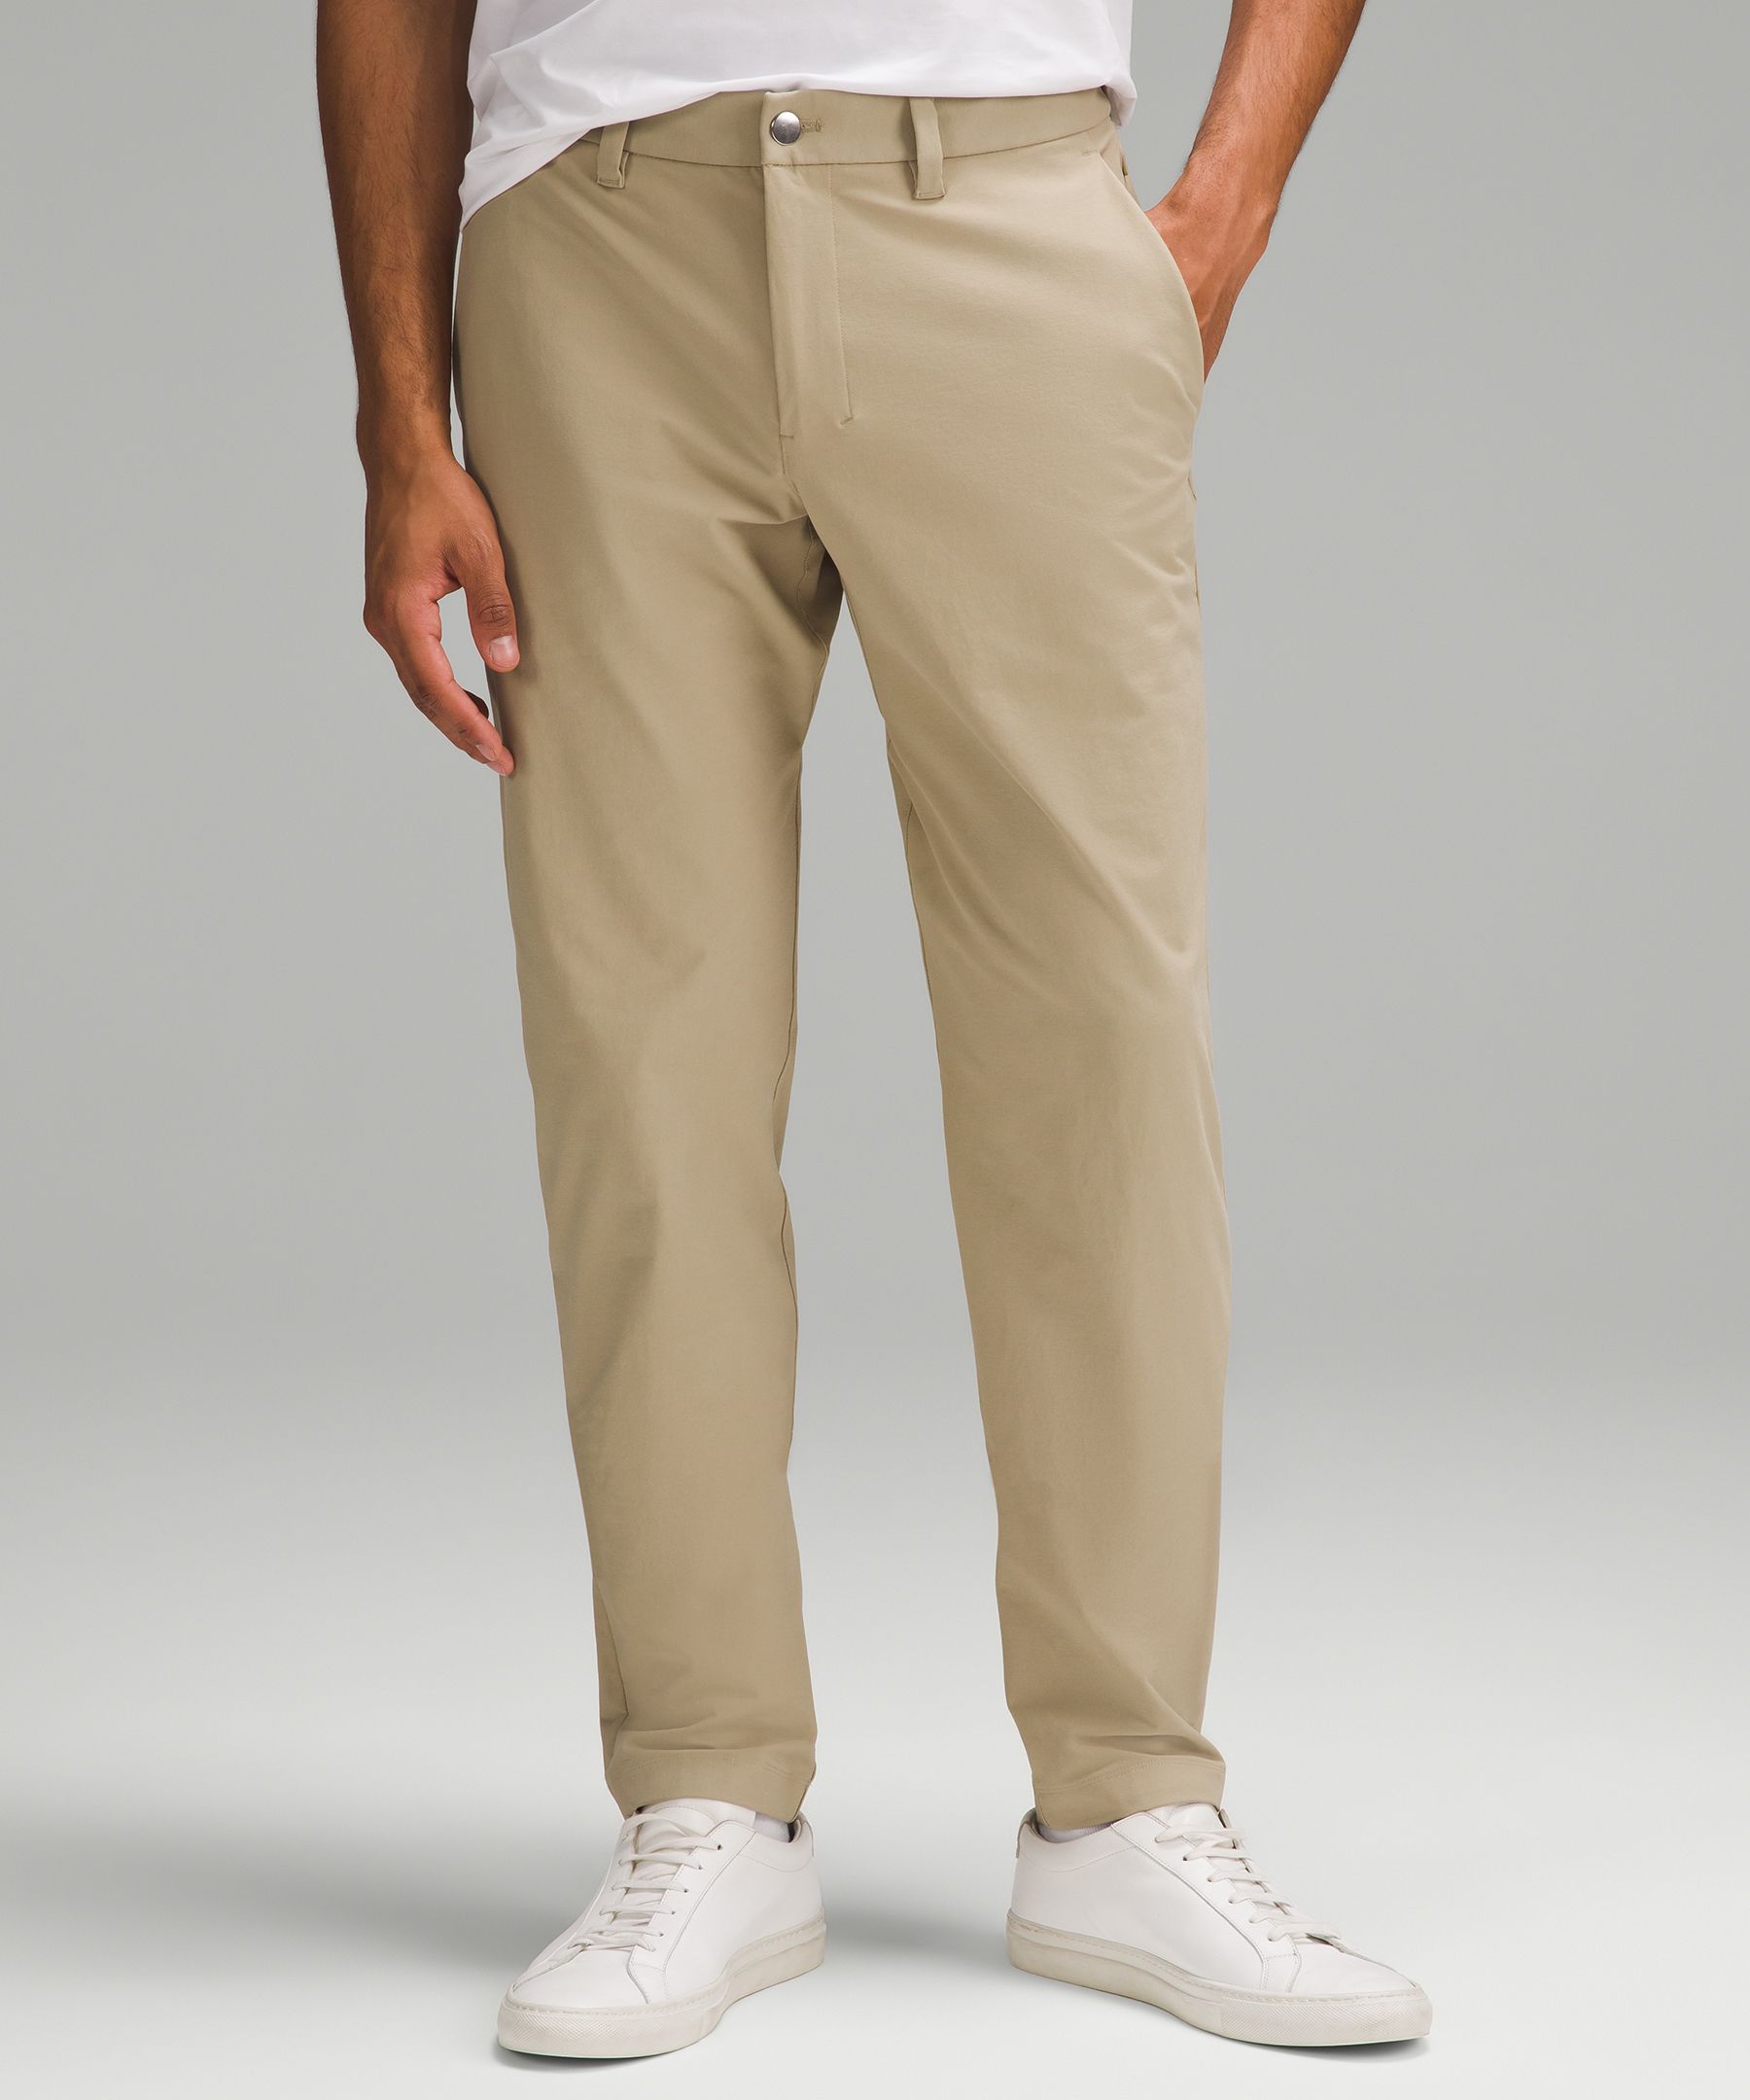 Lululemon Abc Slim-fit Trousers 30"l Stretch Cotton Versatwill